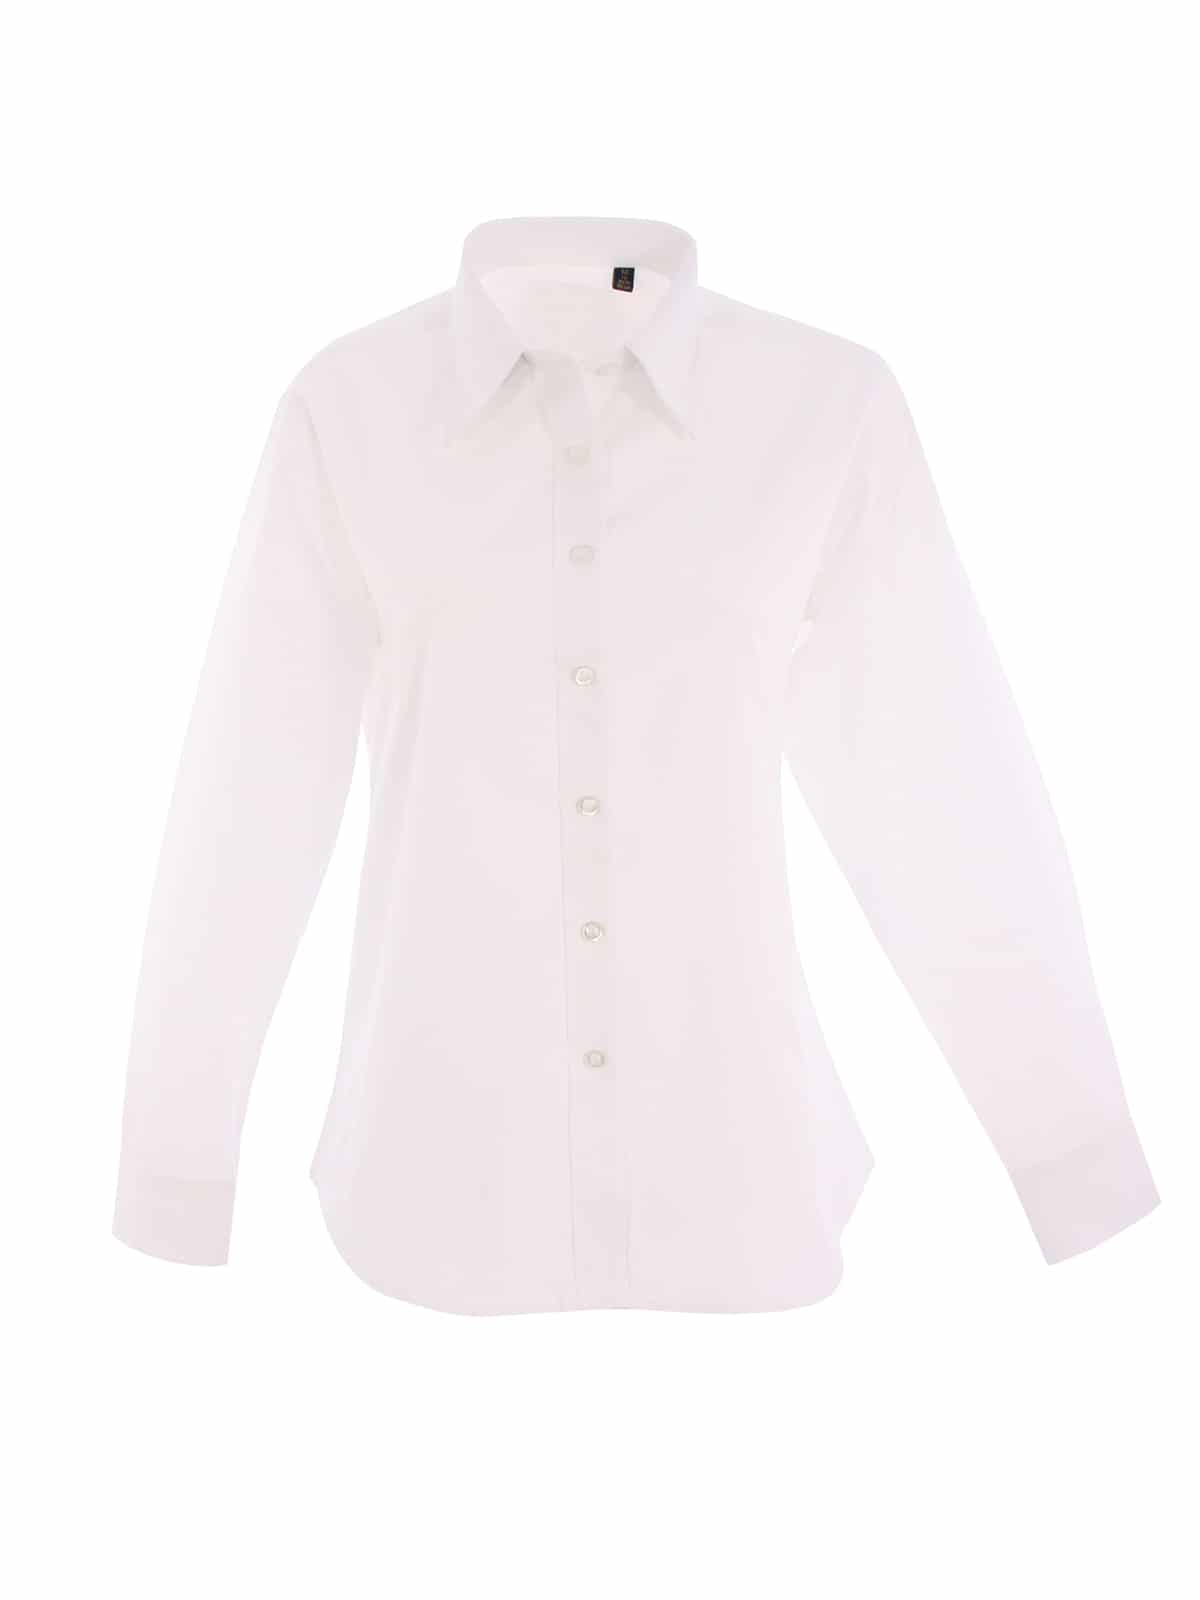 Uneek Ladies Pinpoint Oxford Full Sleeve Shirt